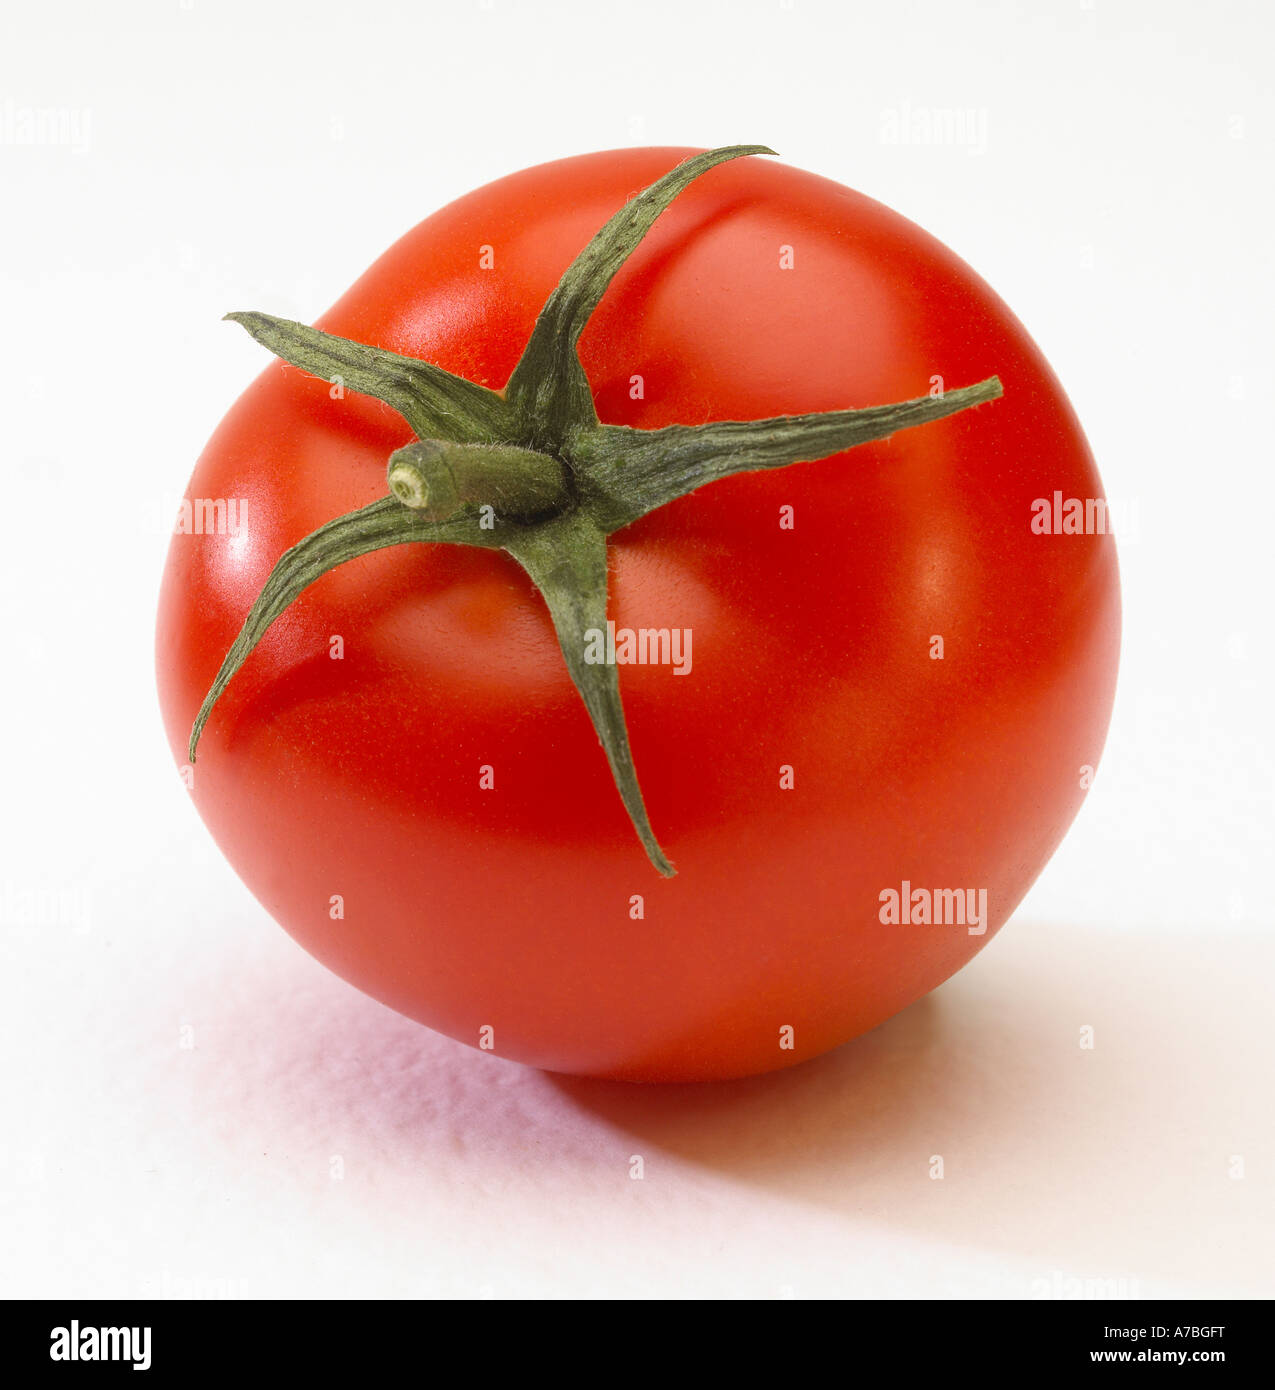 SINGLE FRESH RIPE RED TOMATO ON WHITE BACKGROUND Stock Photo